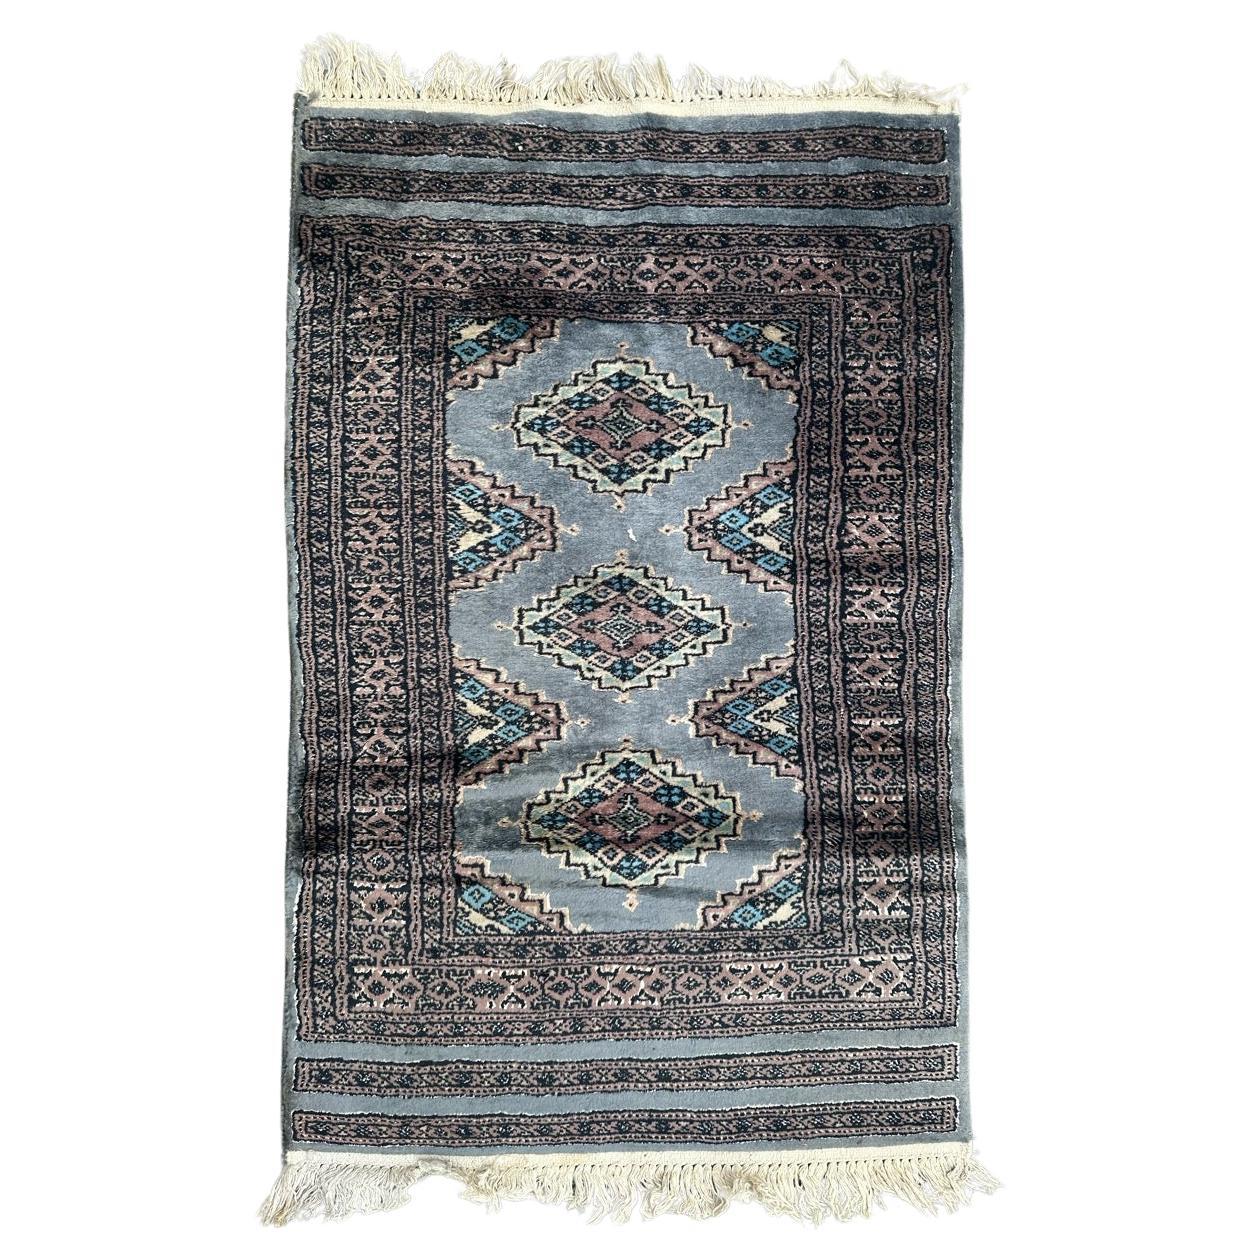 Le joli tapis turkmène Bokhara Design/One de Bobyrug